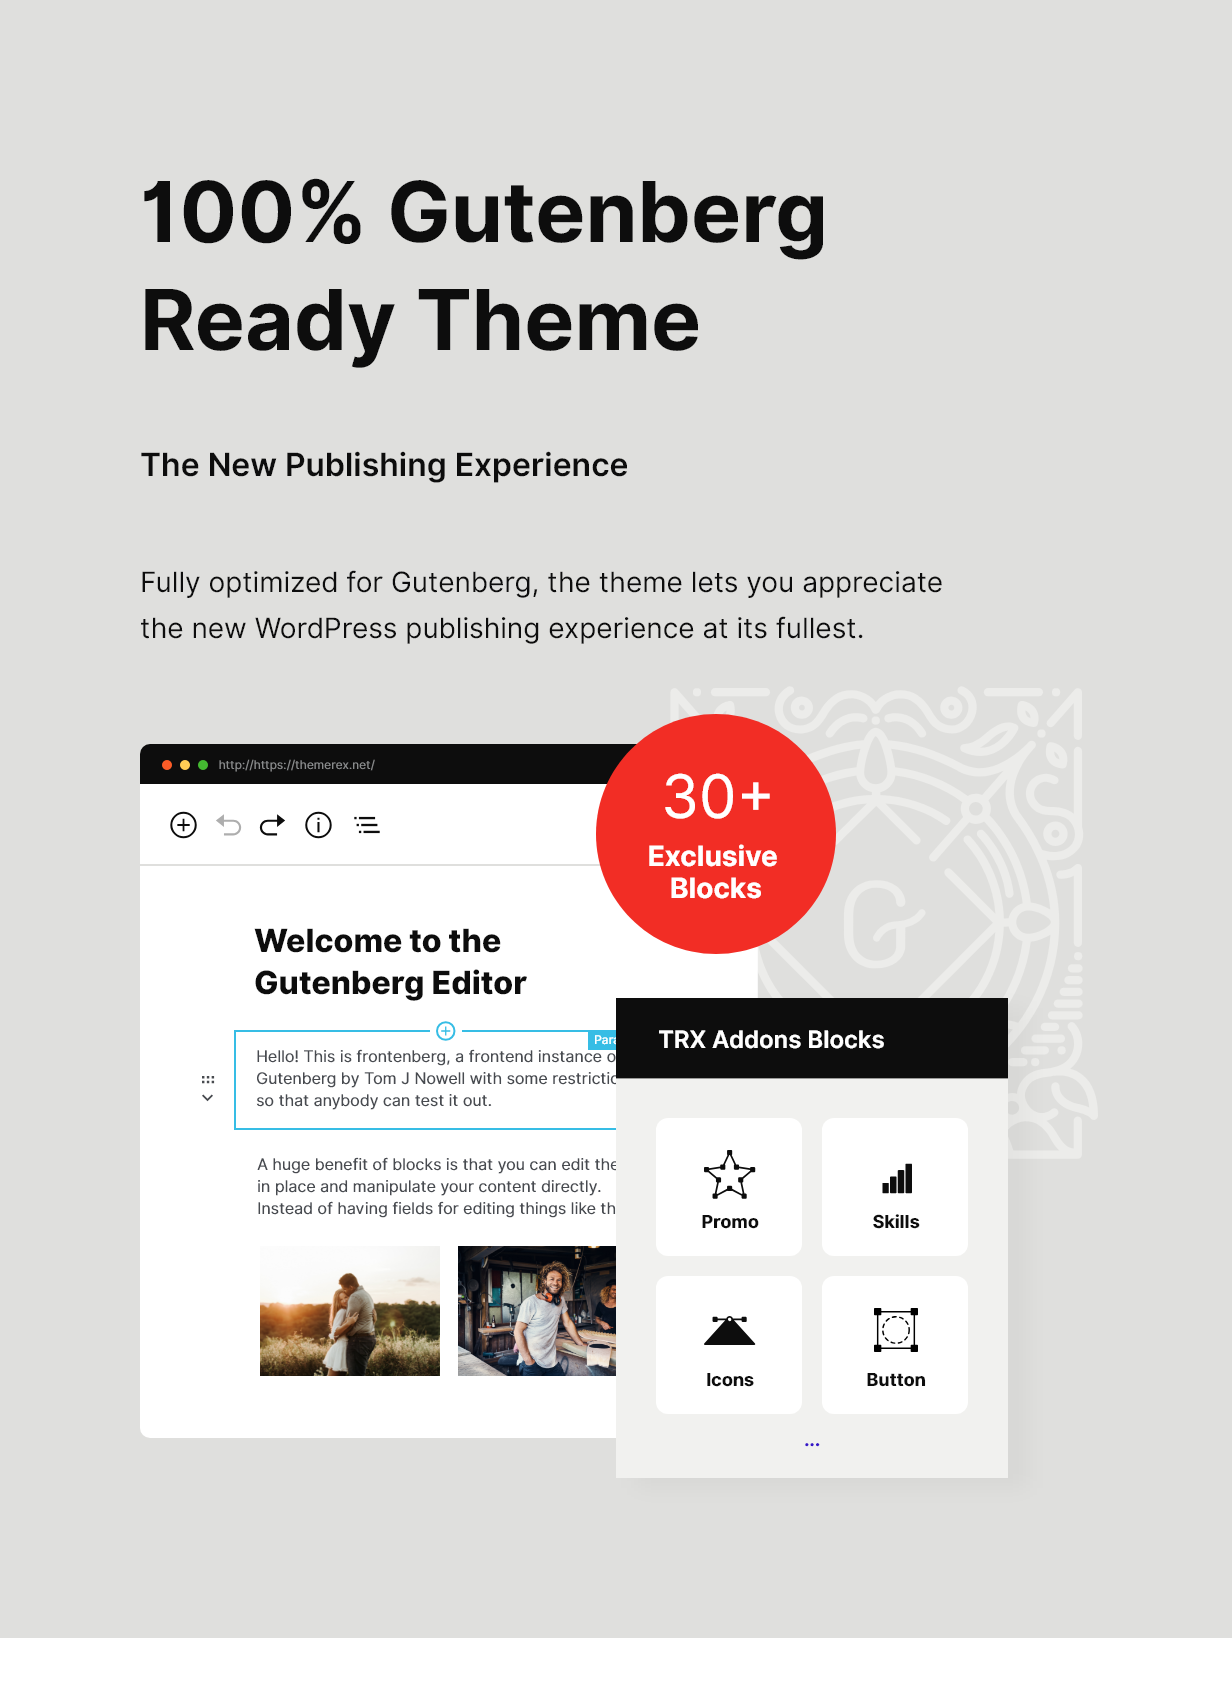 Katelyn | Creative Gutenberg Blog WordPress Theme